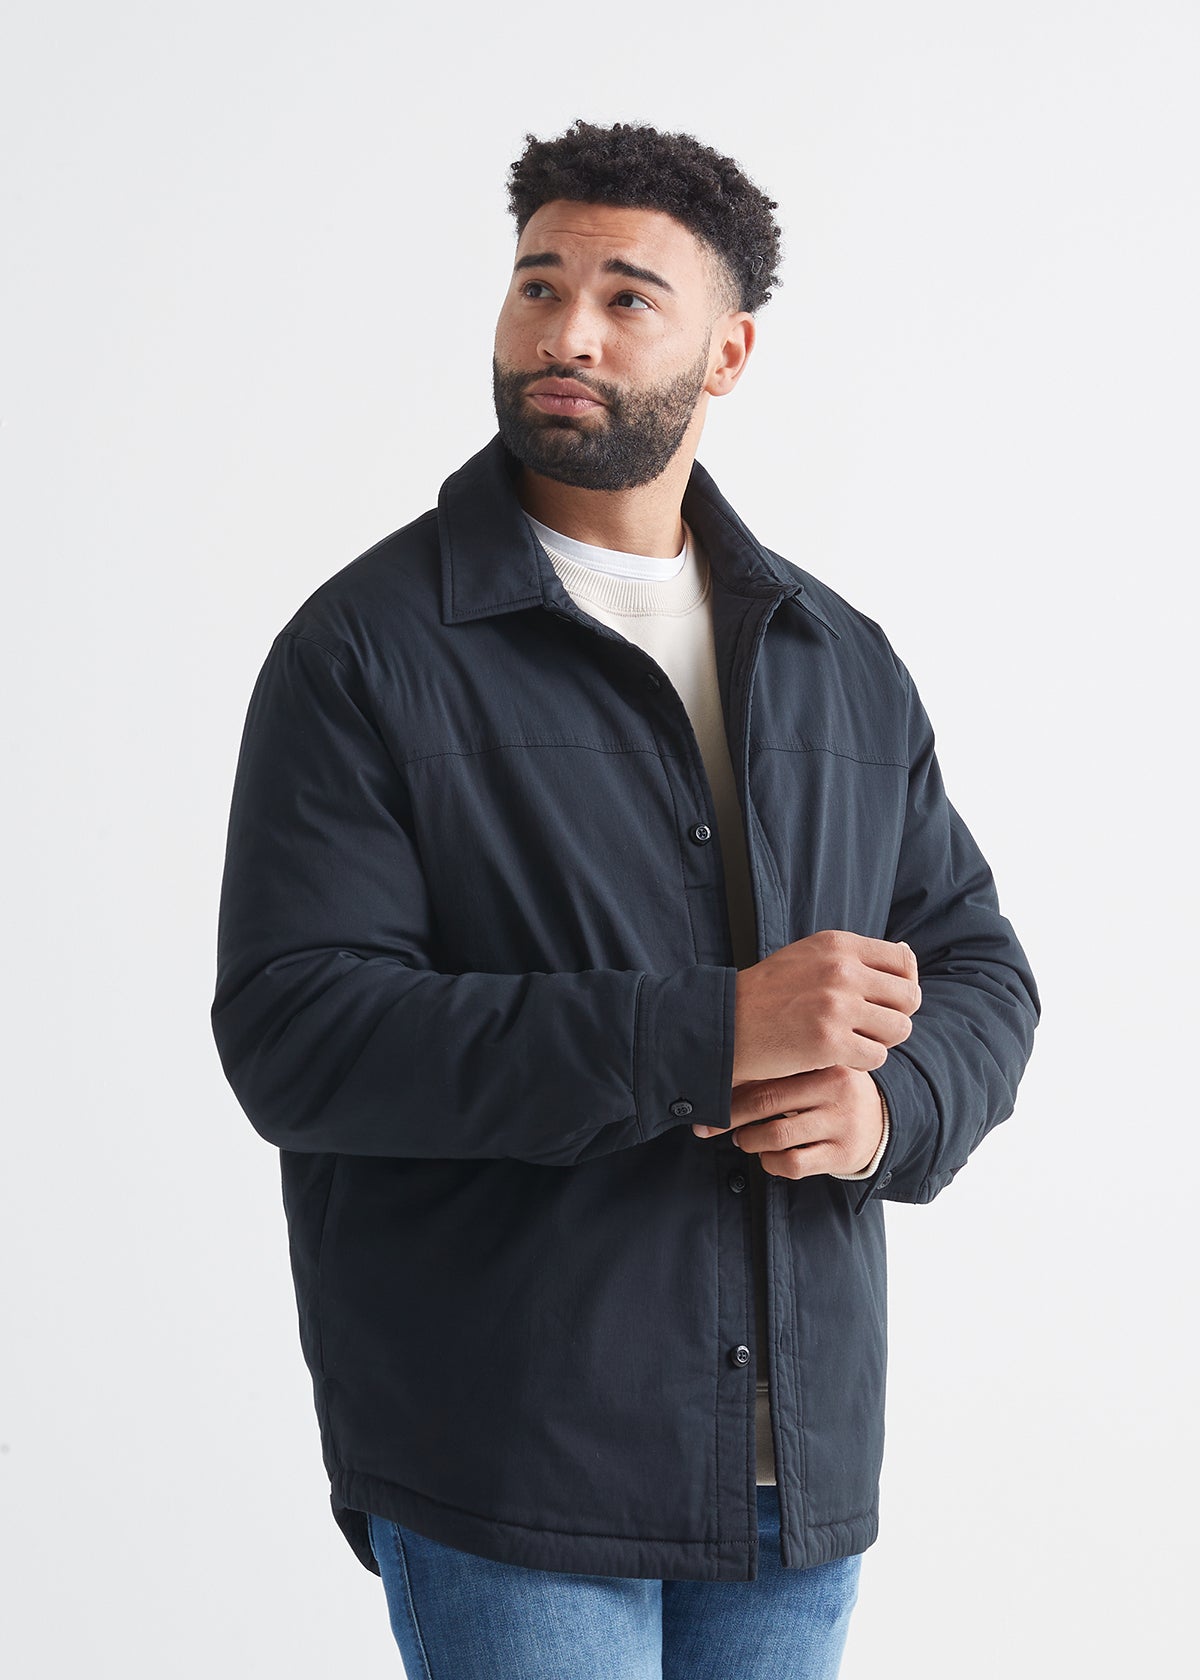 mens lightweight insulated black shirt jacket front